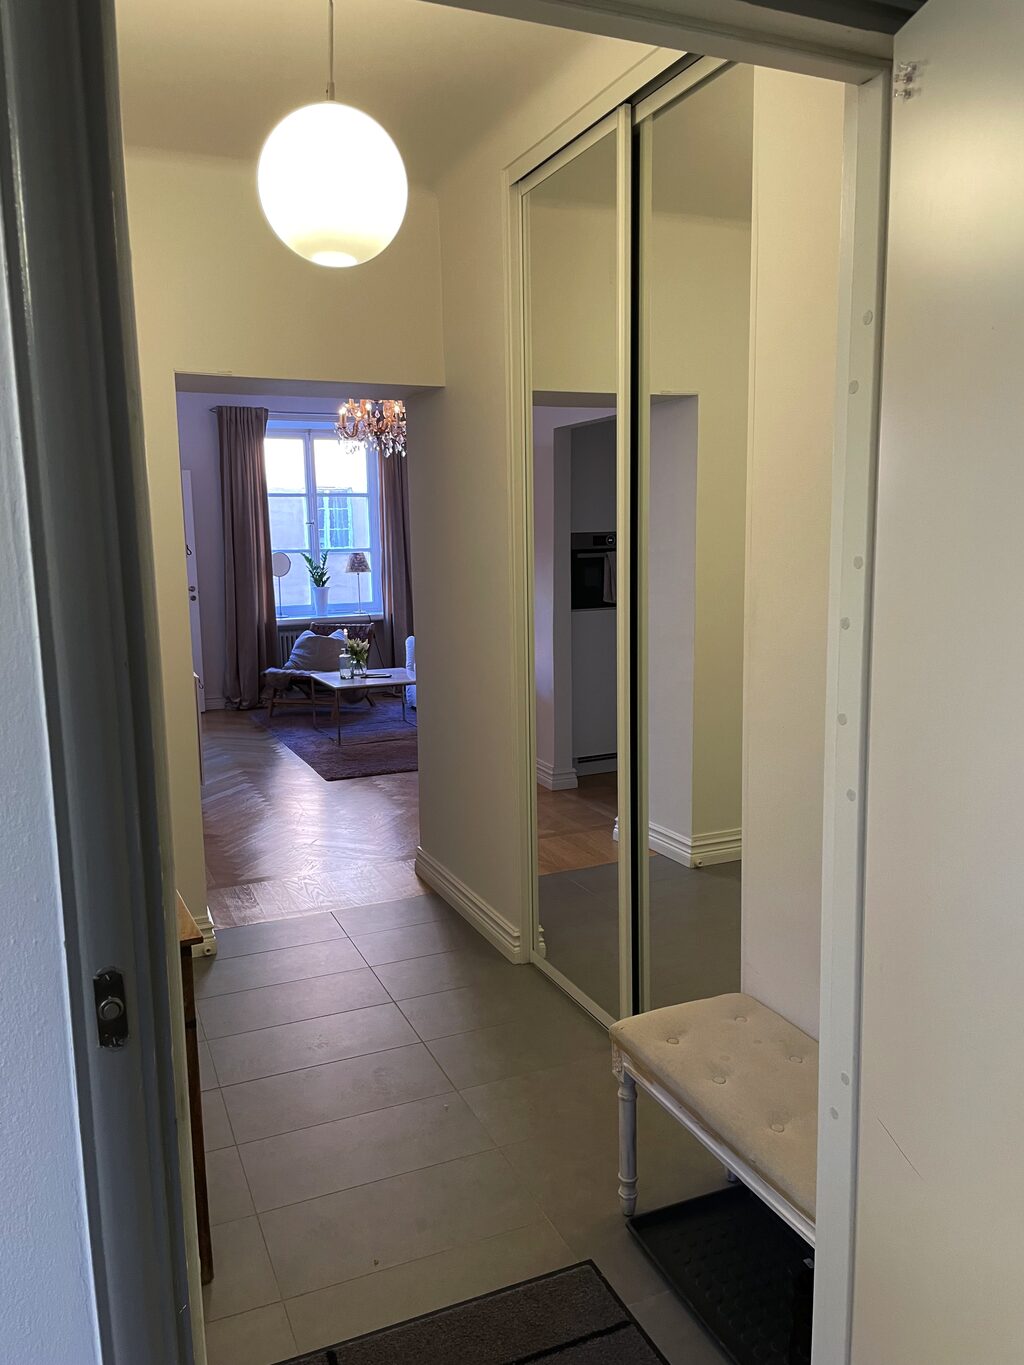 Lägenhetsbyte - Heleneborgsgatan 44